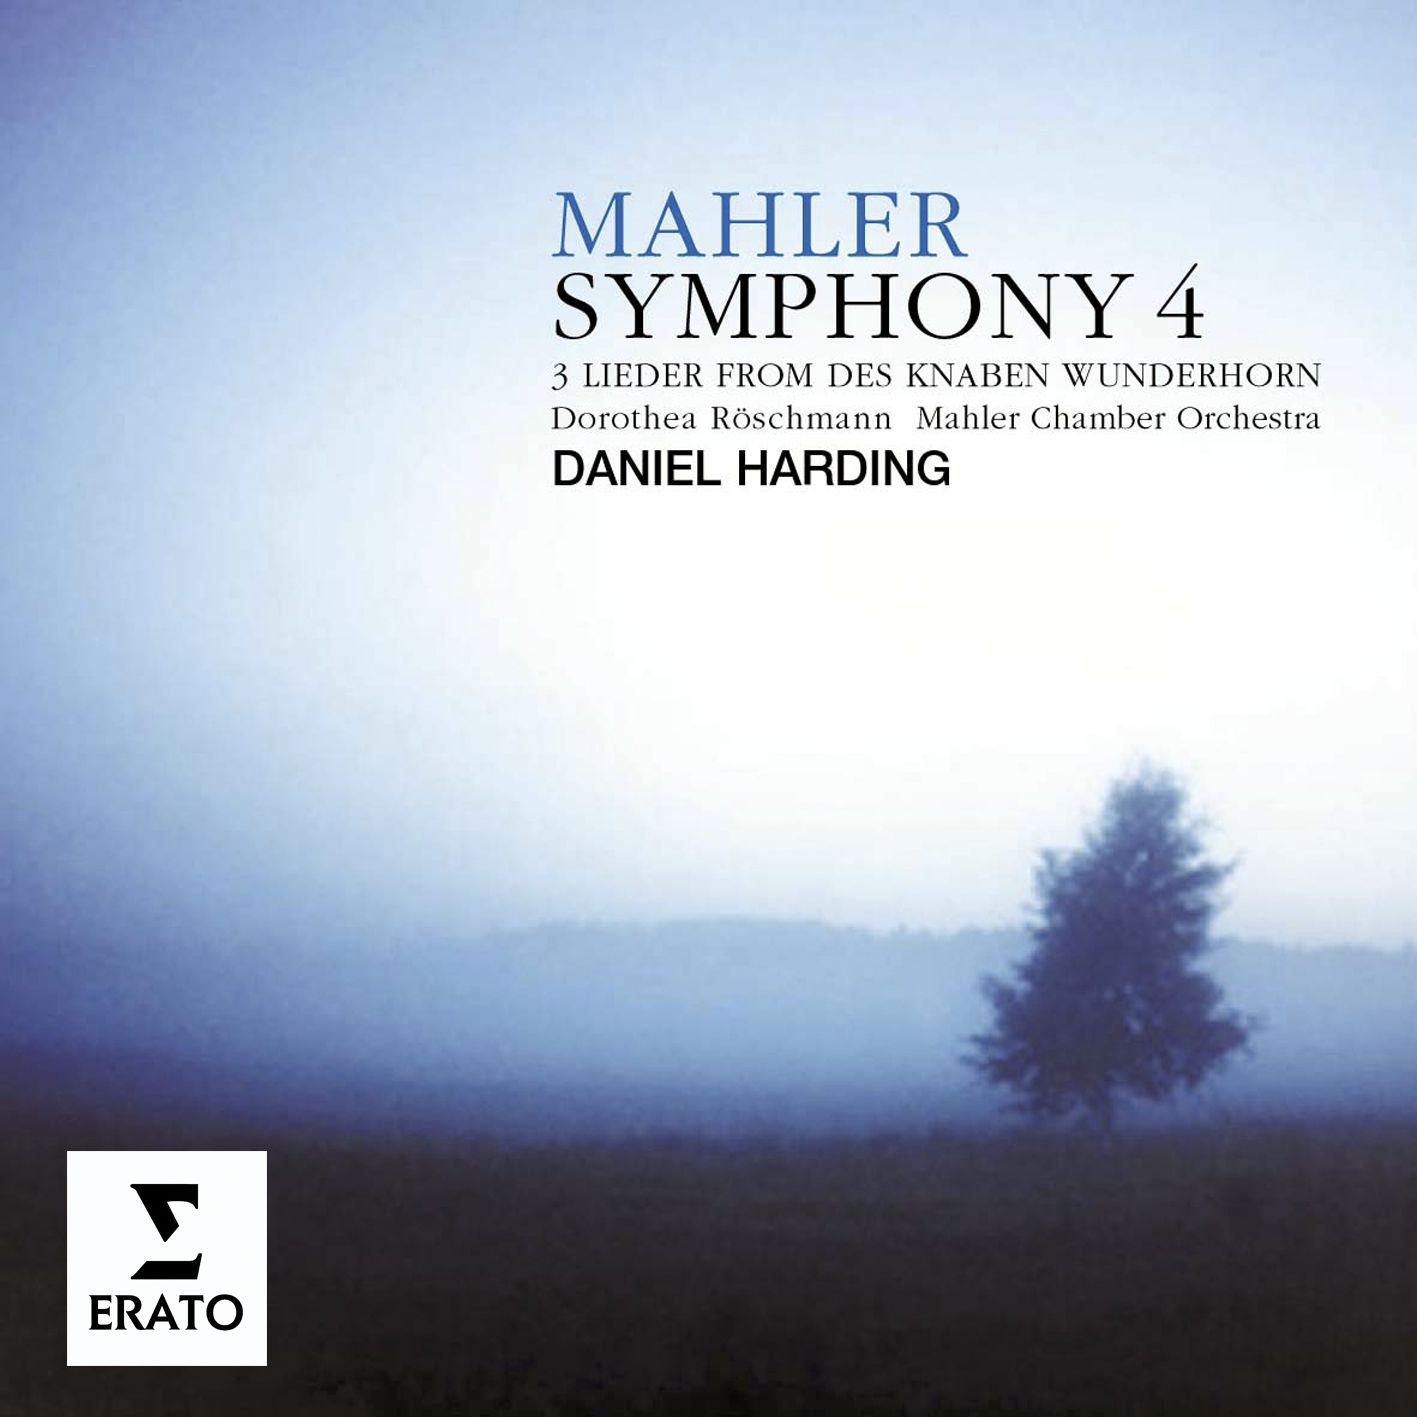 Mahler: Symphony No 4 in G major